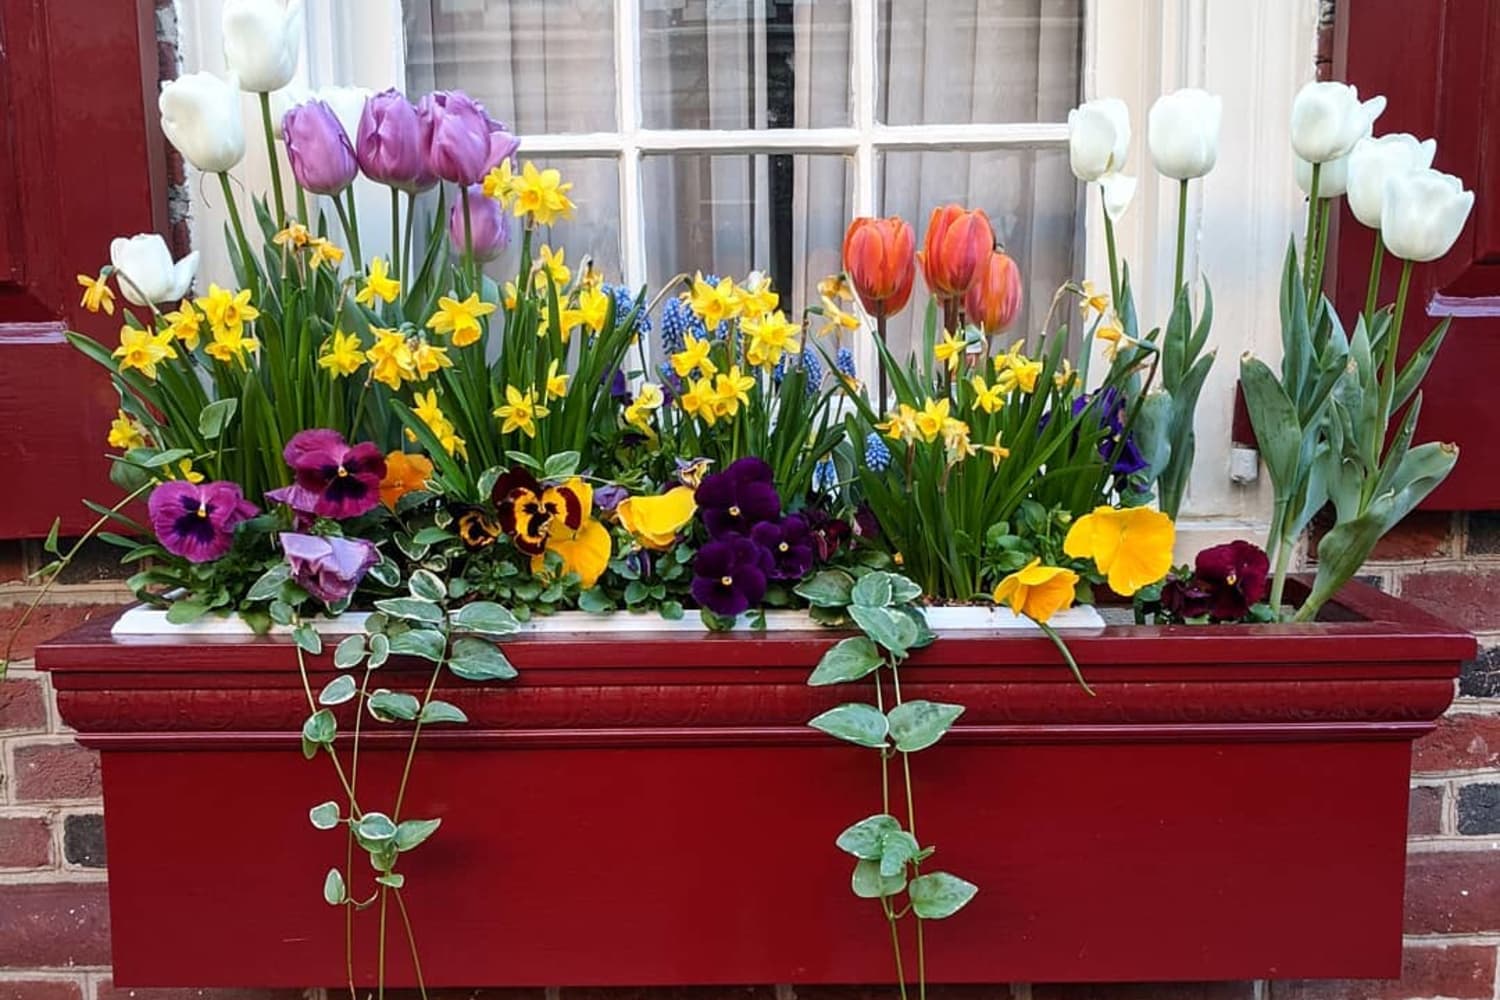 20 Window Box Flower Ideas With Photos of Inspiring Plantings ...